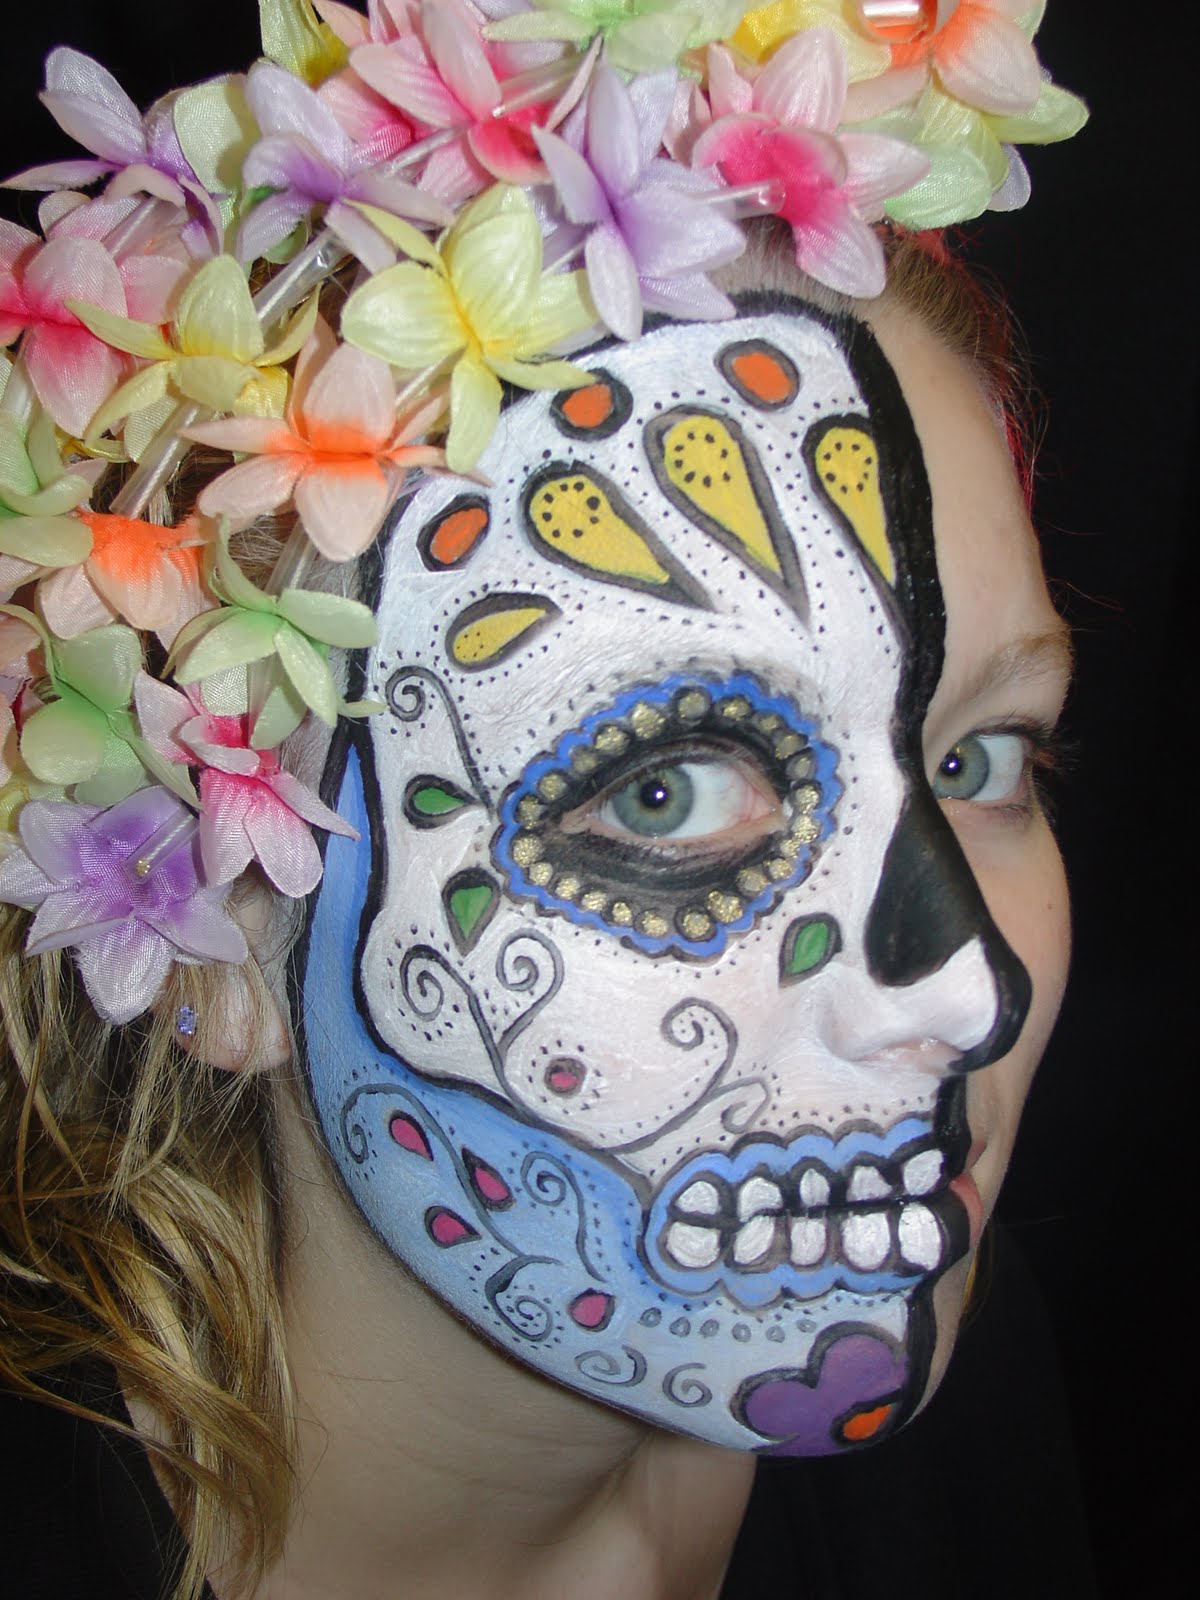 Planet Make-up - A Blog by Deborah Bennett: Day of the Dead Festival ...